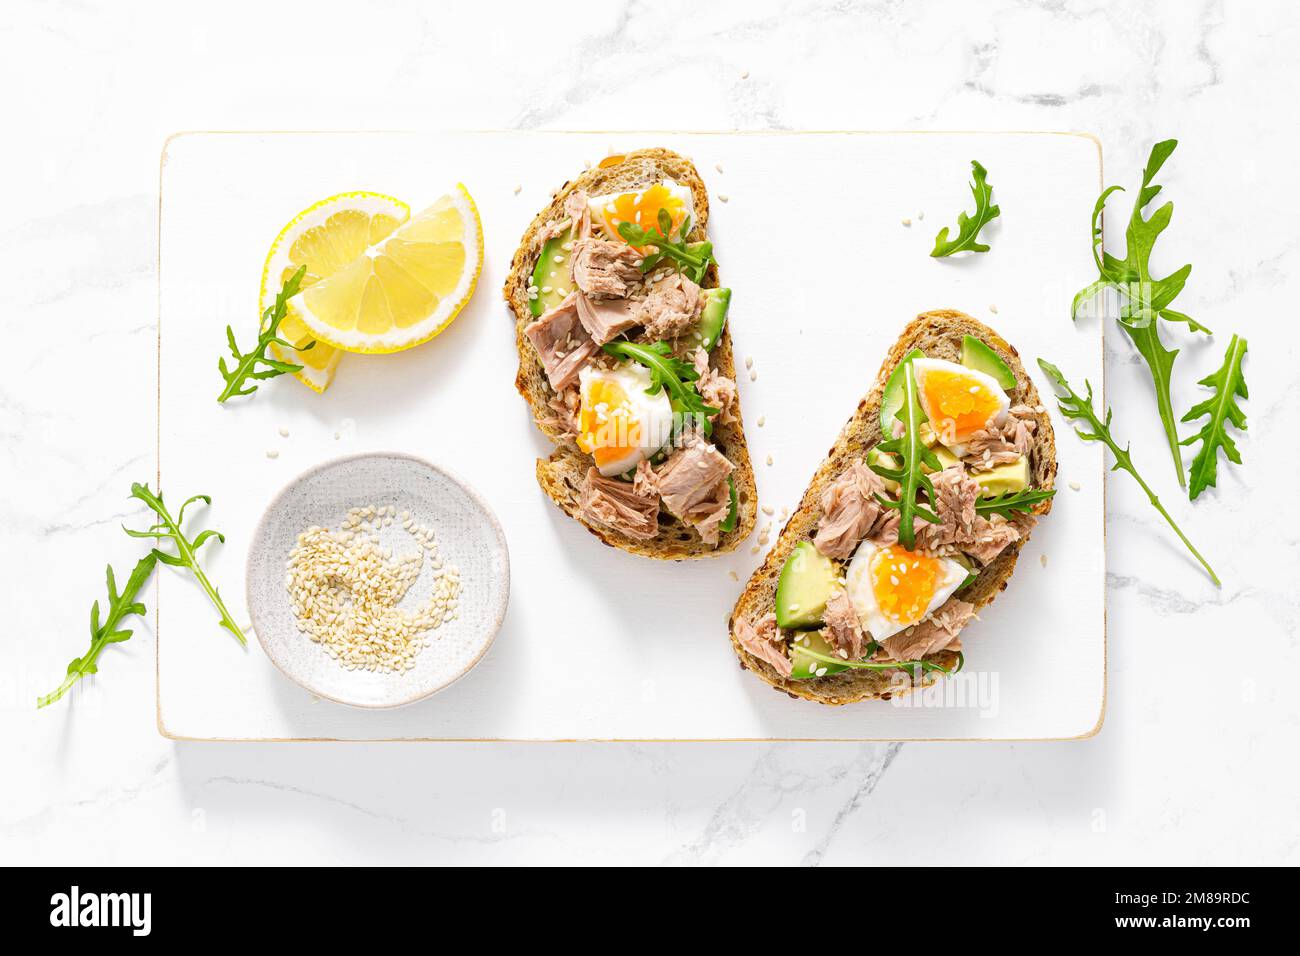 Tuna toast. Open sandwiches with whole grain bread, canned tuna, boiled egg, avocado and arugula. Top view Stock Photo